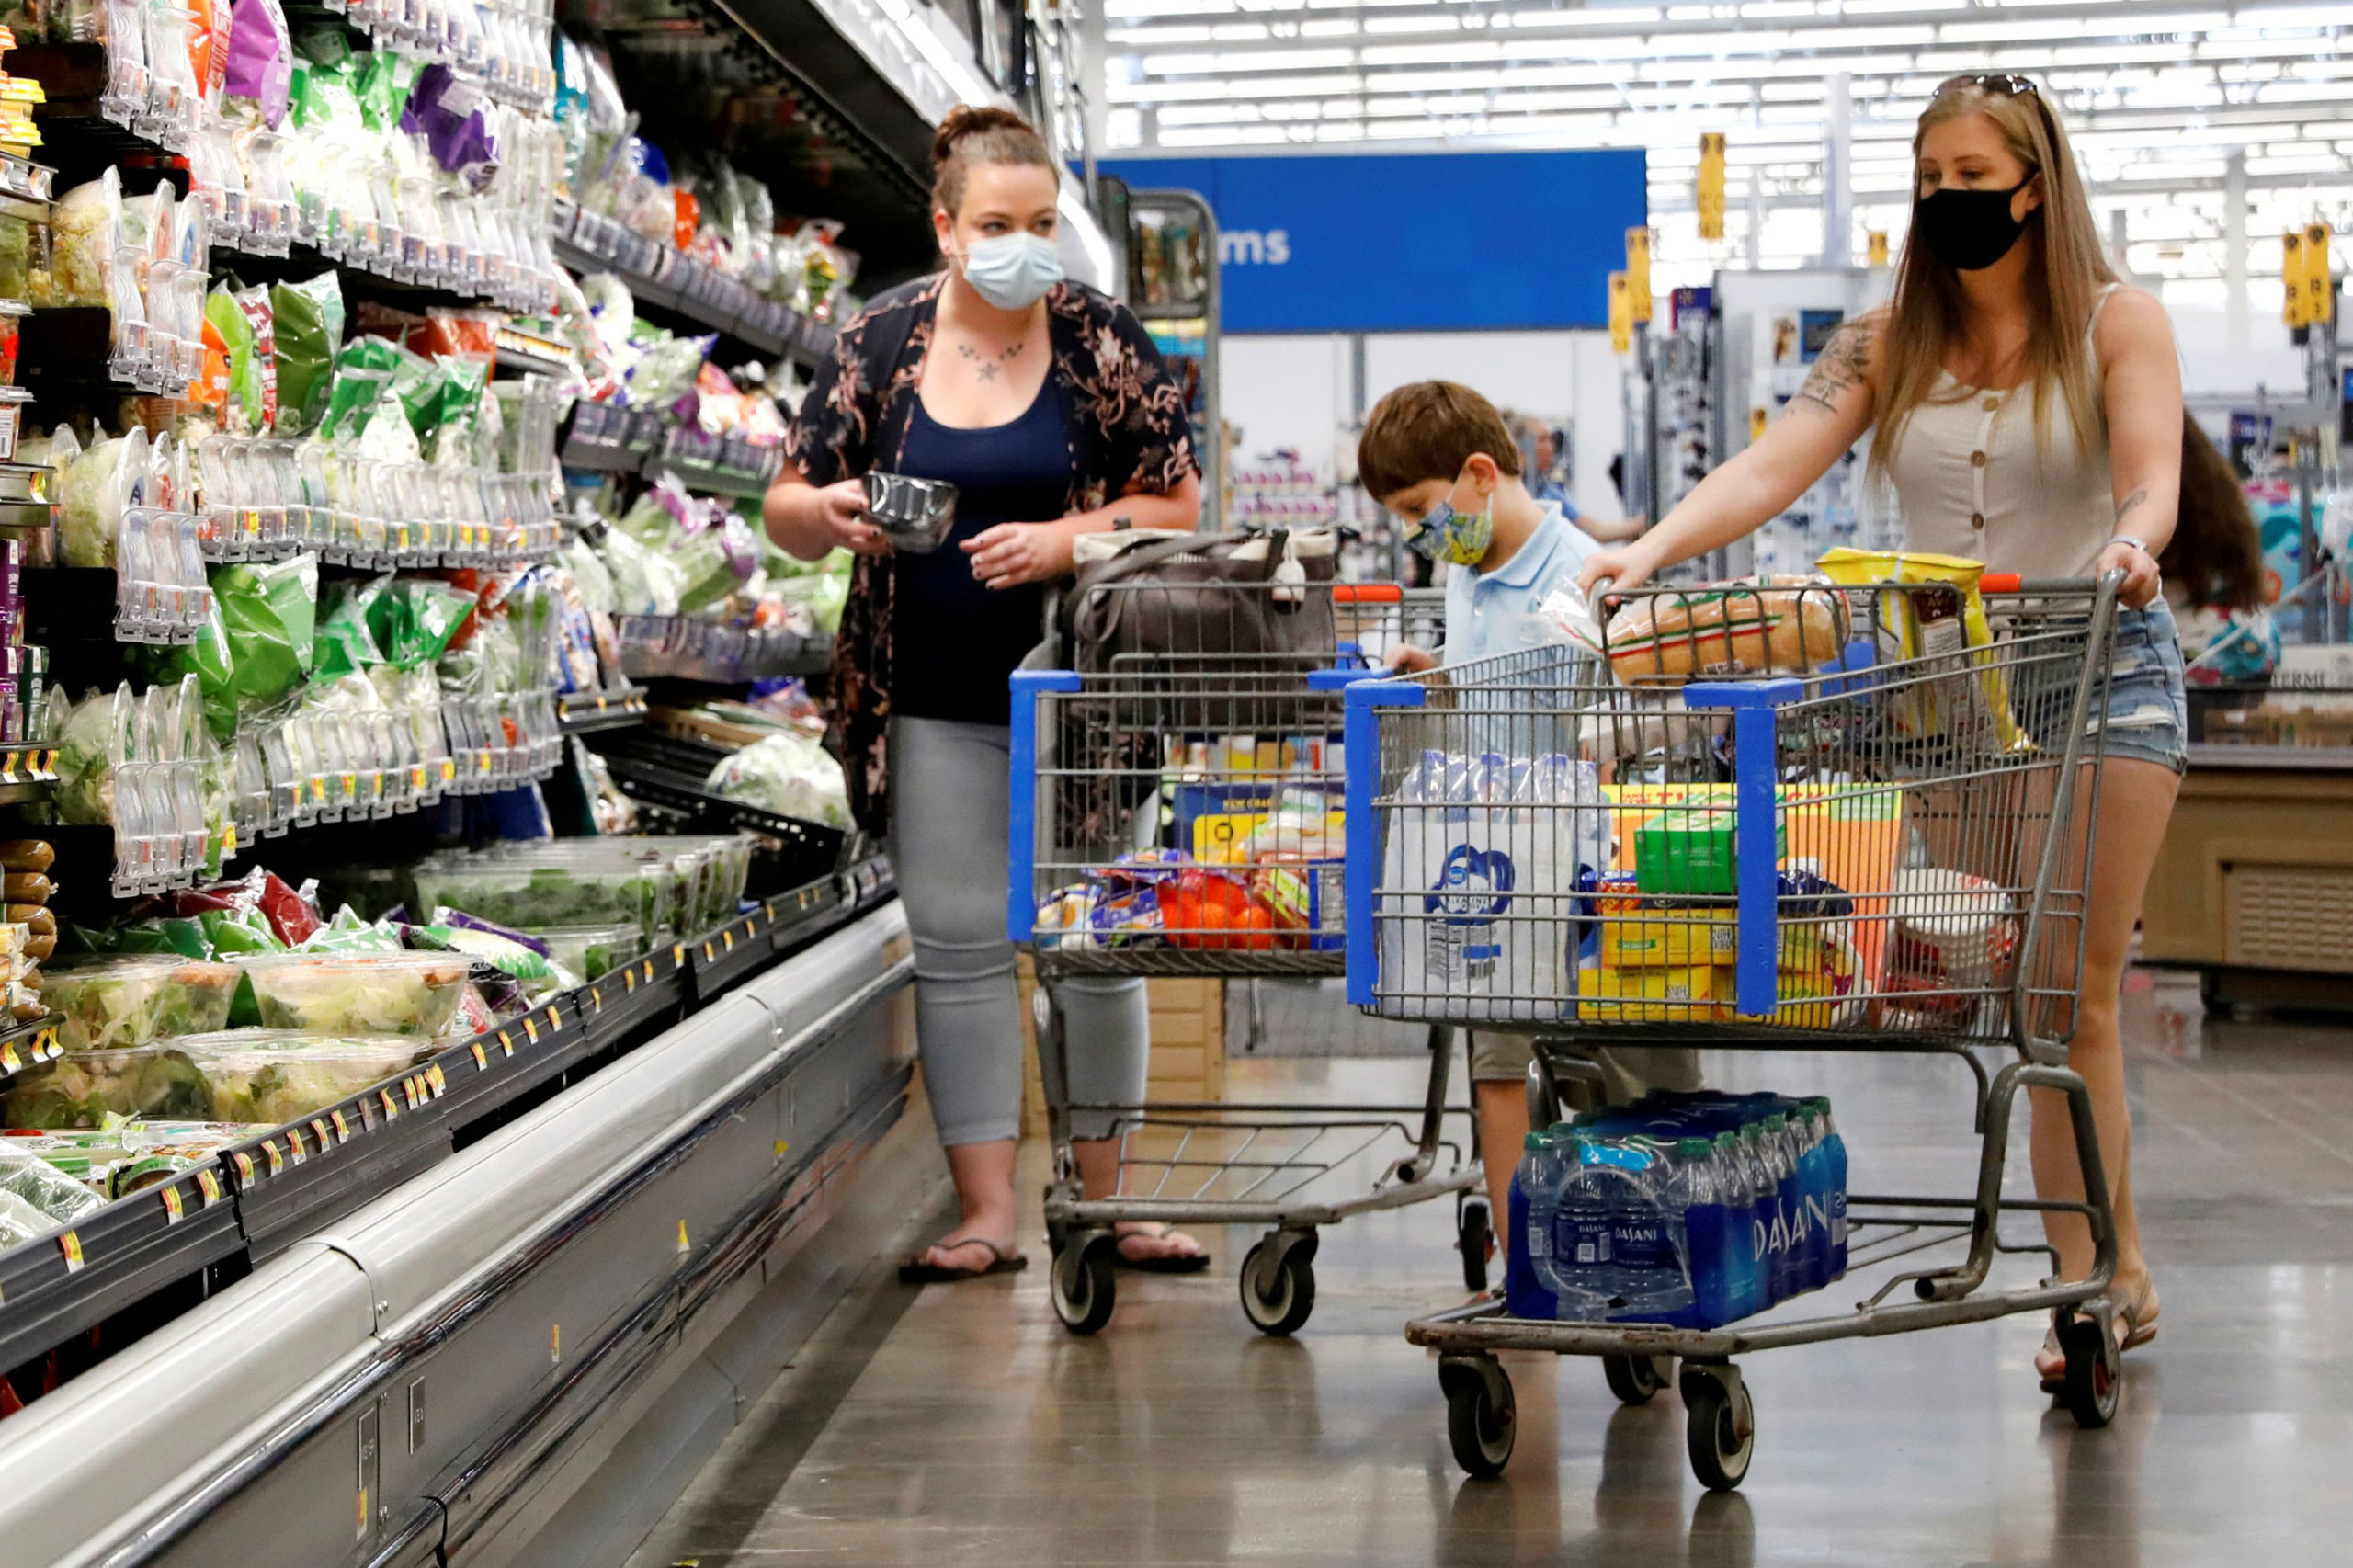 Walmart to launch its membership program, Walmart+, in mid-September